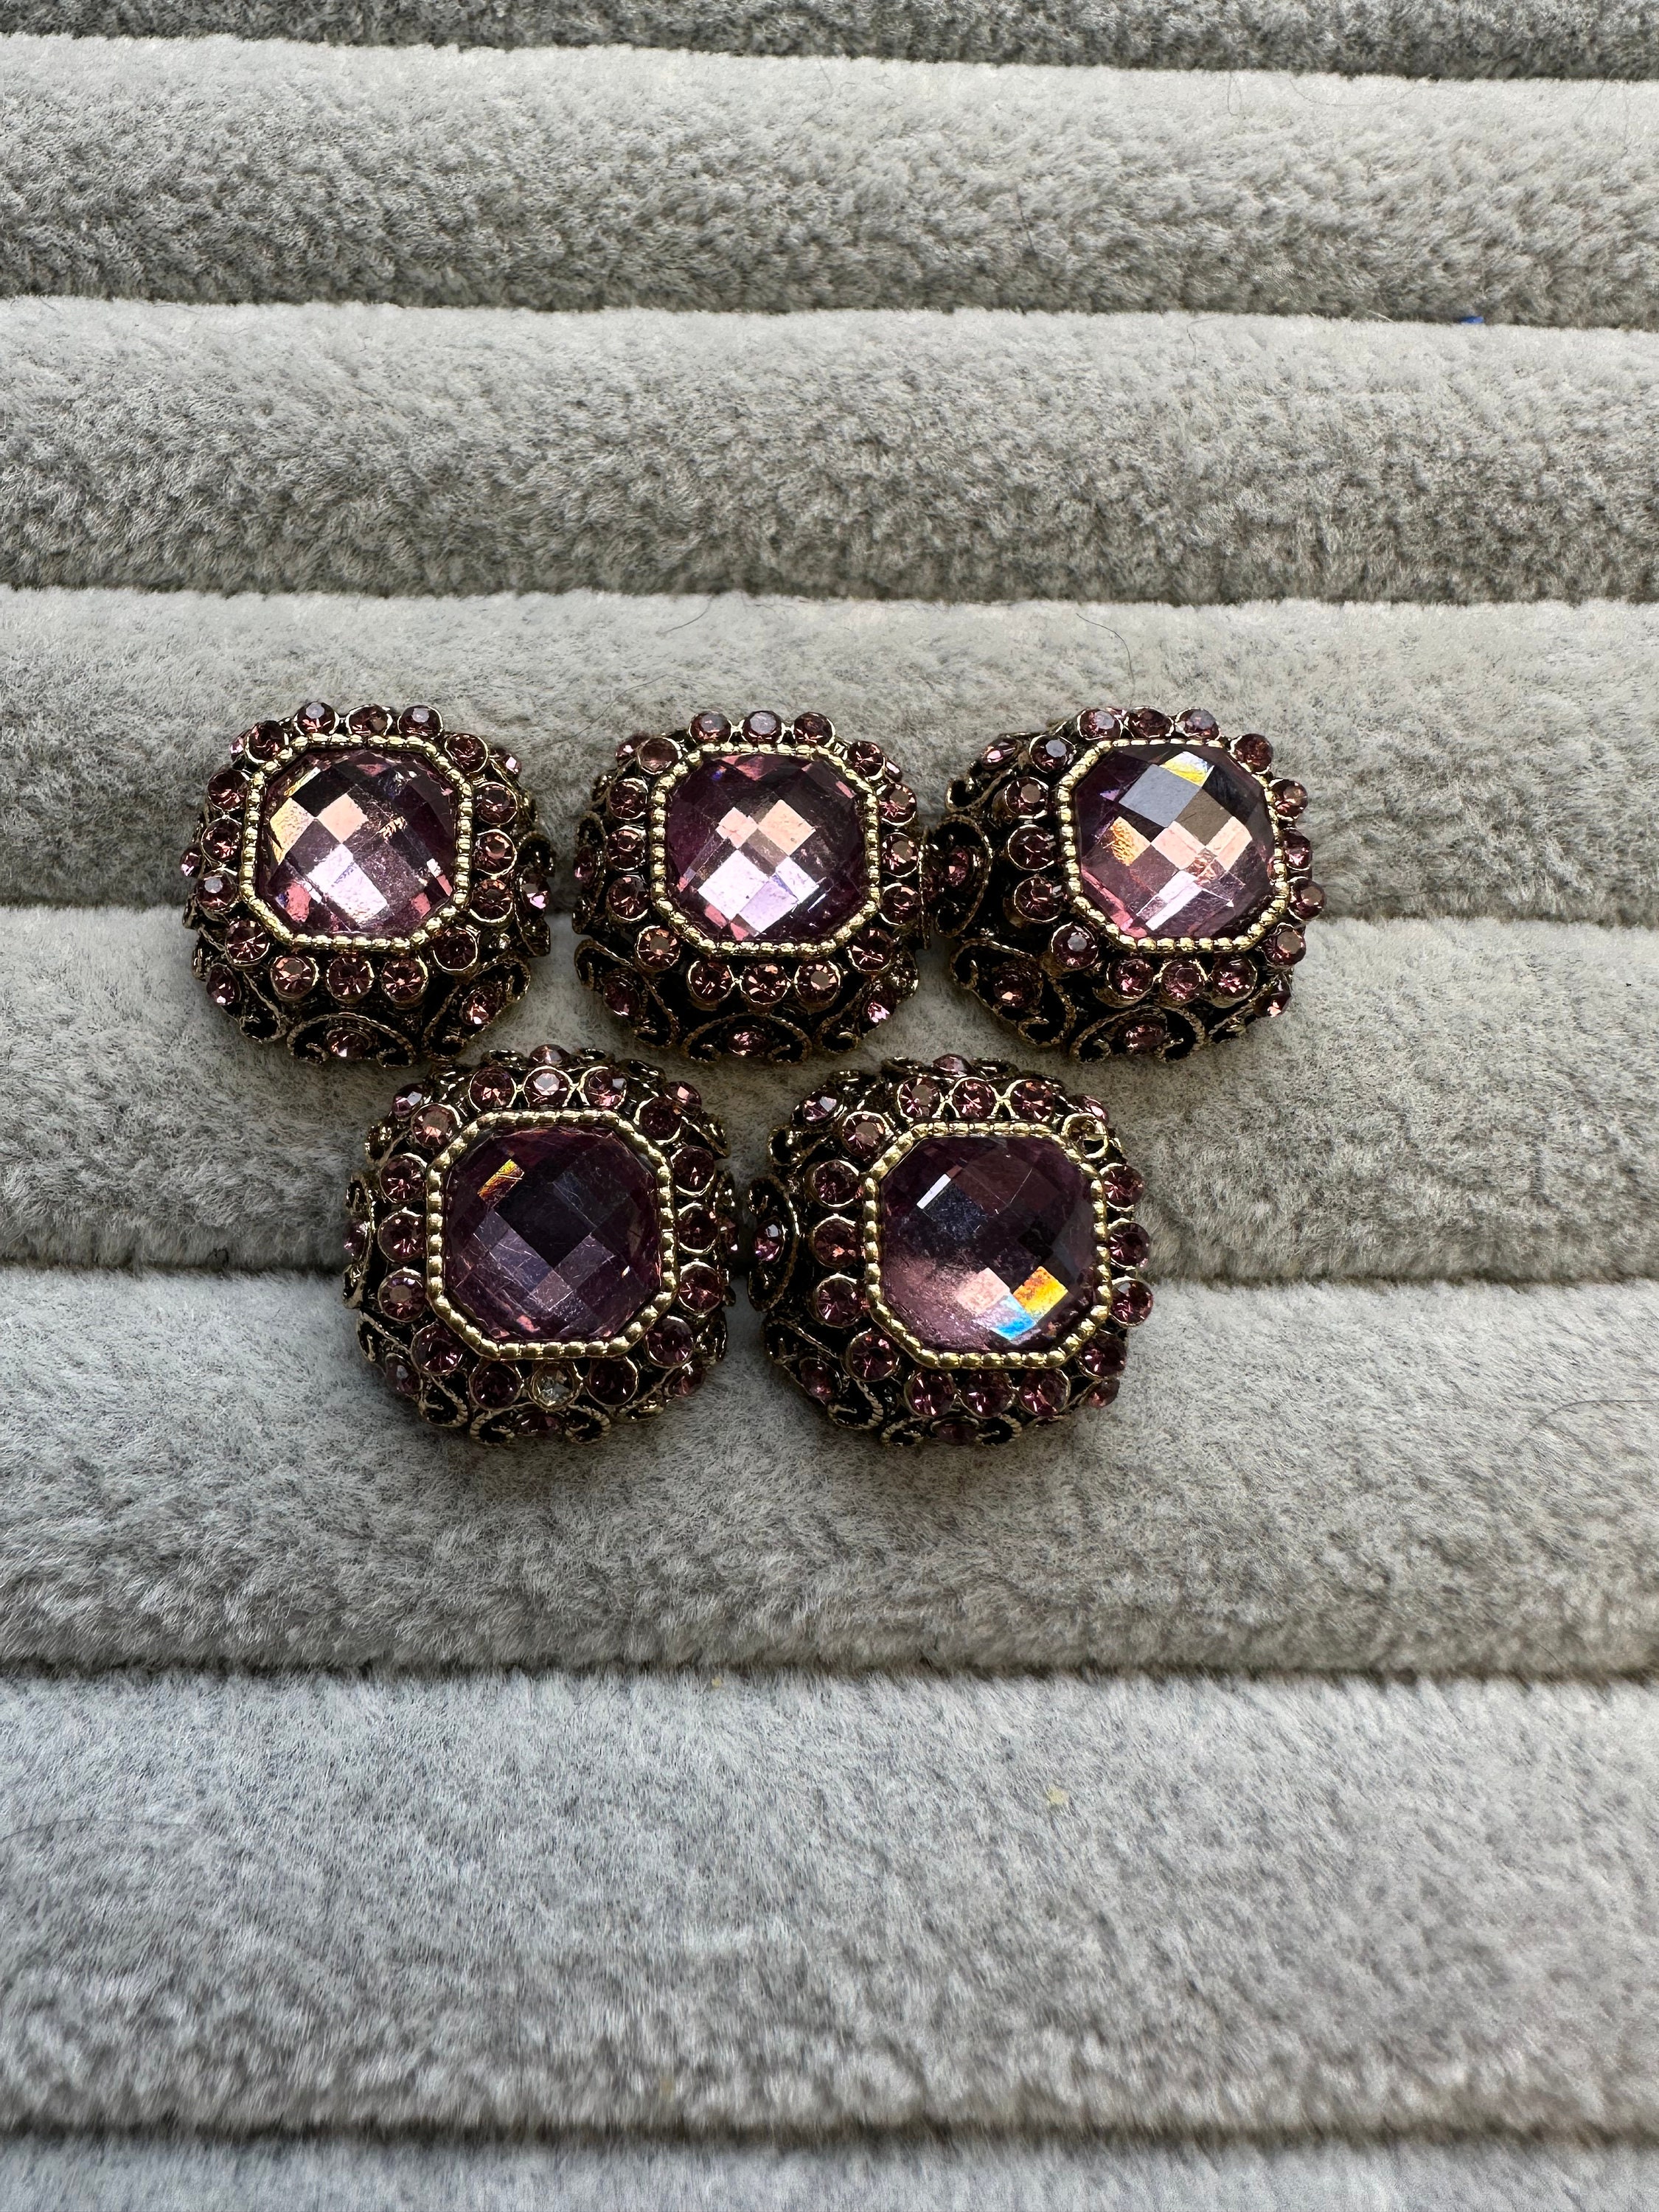 Buttons Jewel & Diamanté Rhinestone Shank Buttons, Silver Finish, 17mm-27mm  Size Sewing Buttons, Bridal Buttons, Handmade Premium Buttons 